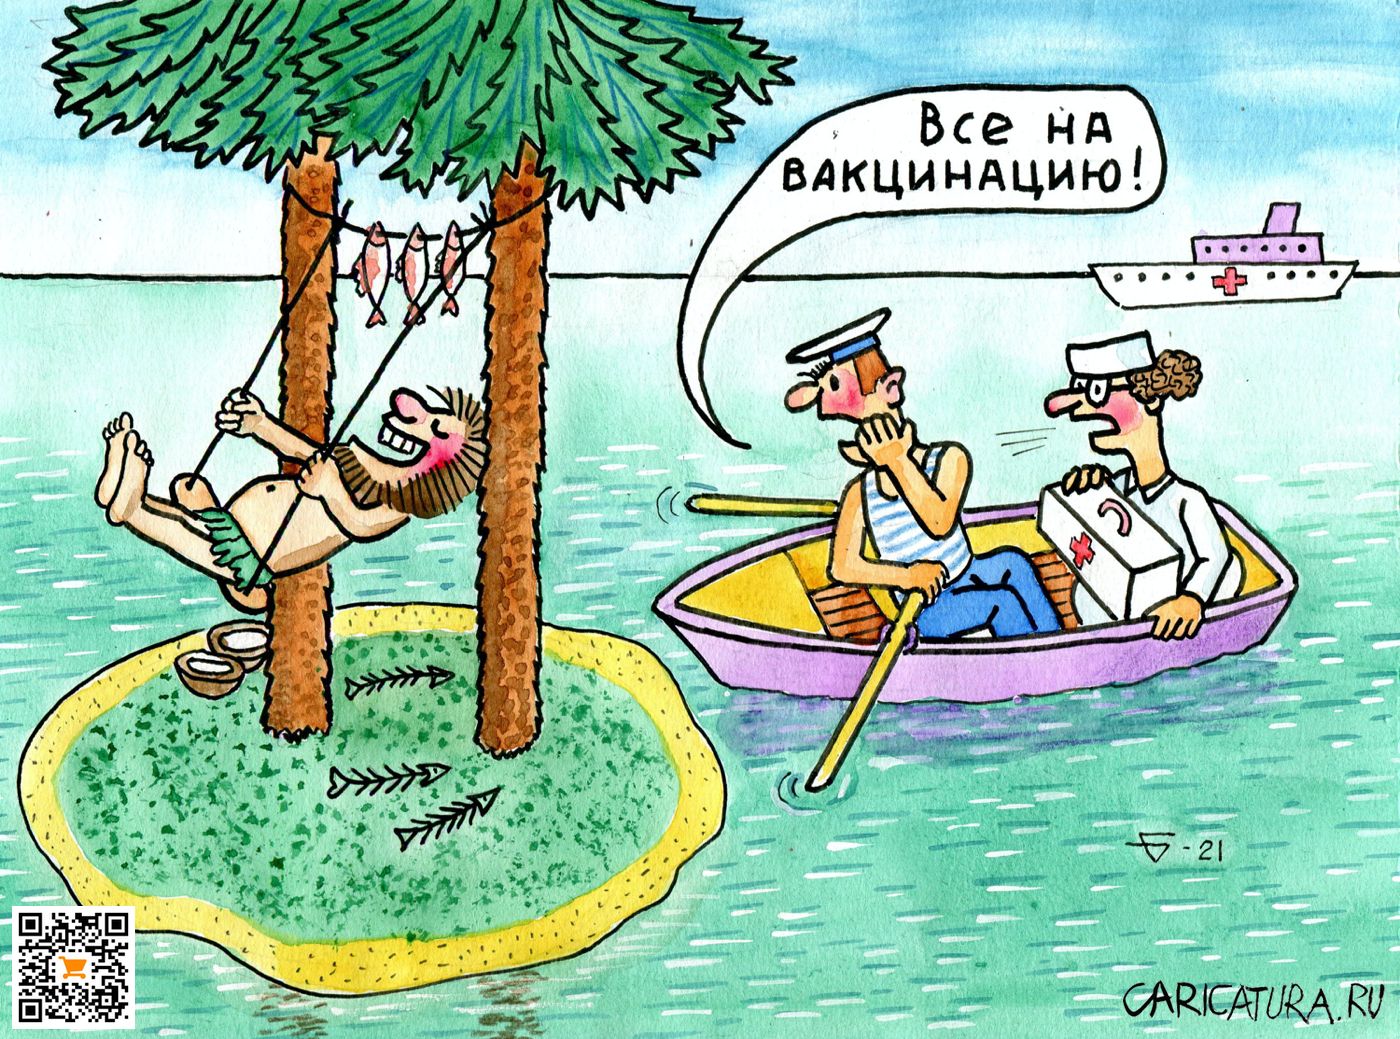 Карикатура "Все на вакцинацию!", Юрий Бусагин